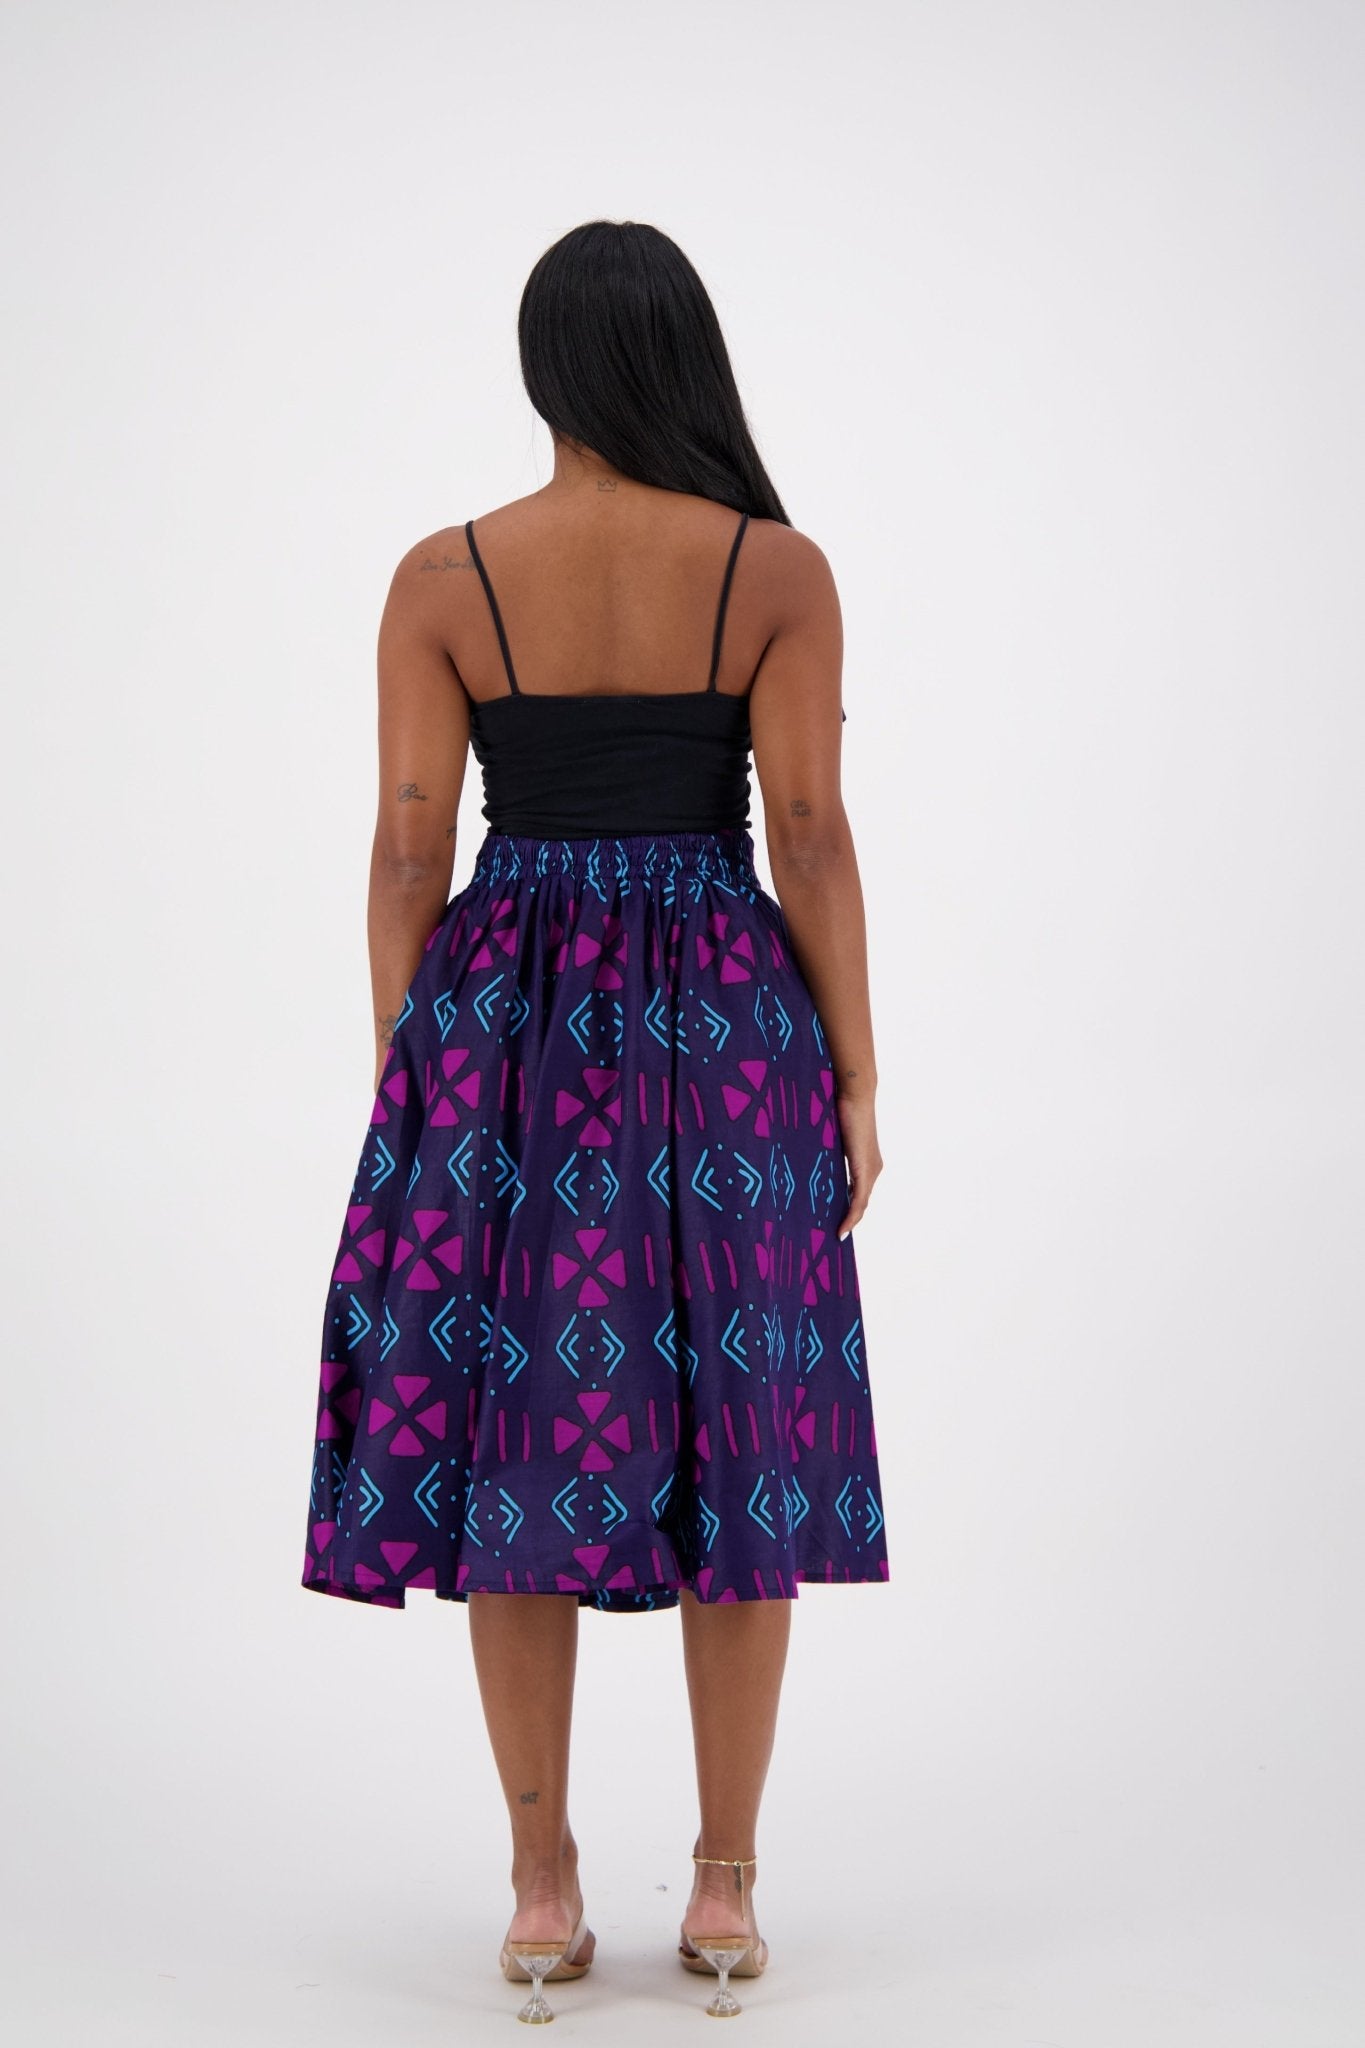 Mid-Length African Print Skirt 16321-238 - Advance Apparels Inc